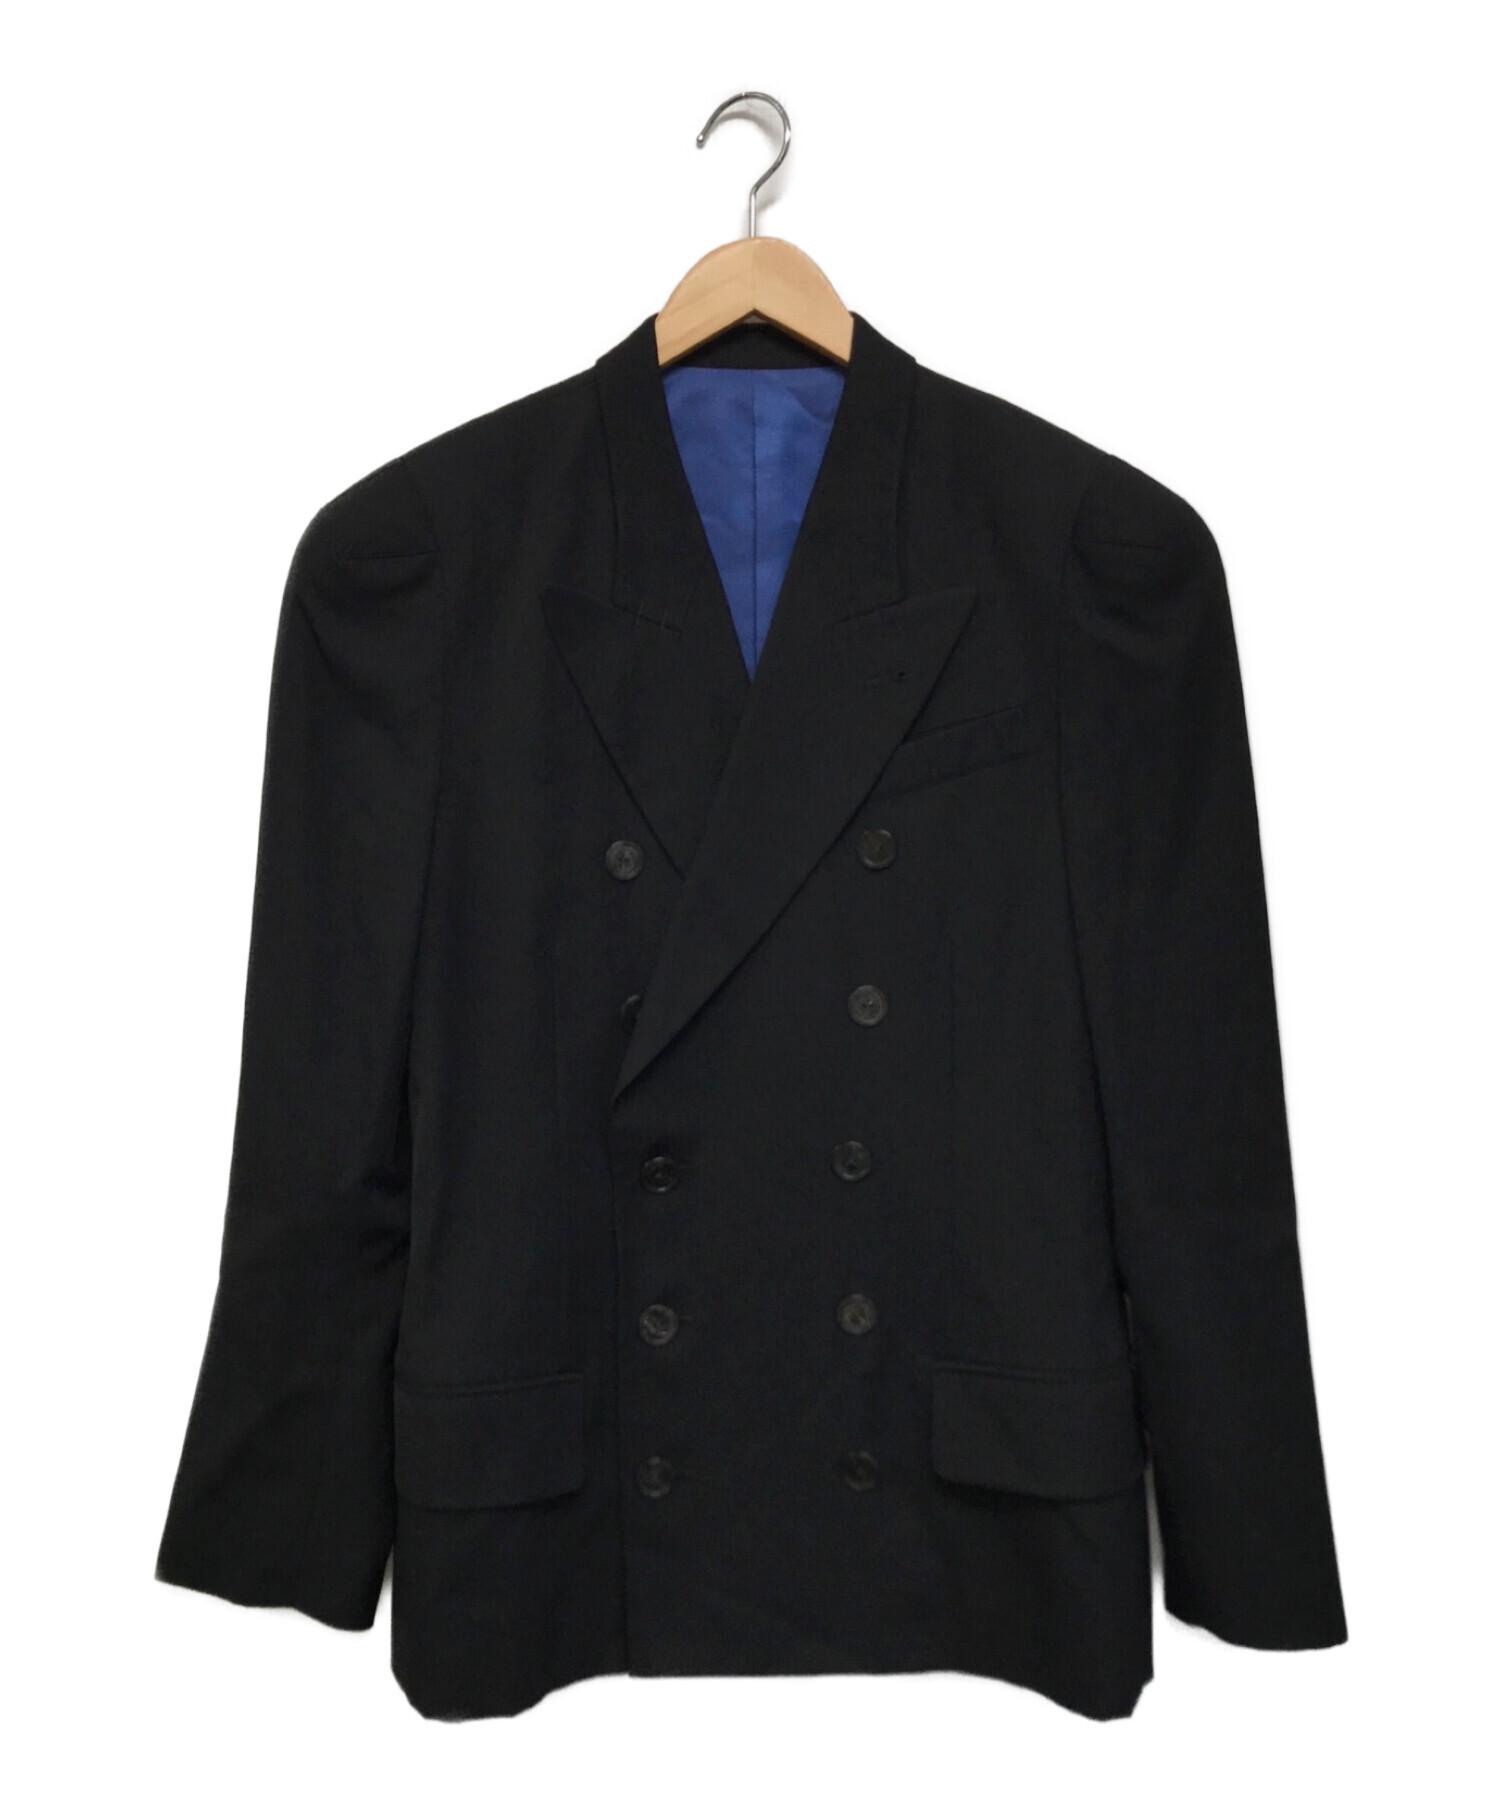 Jean Paul Gaultier homme (ジャンポールゴルチェオム) セットアップスーツ ブラック サイズ:SIZE 48